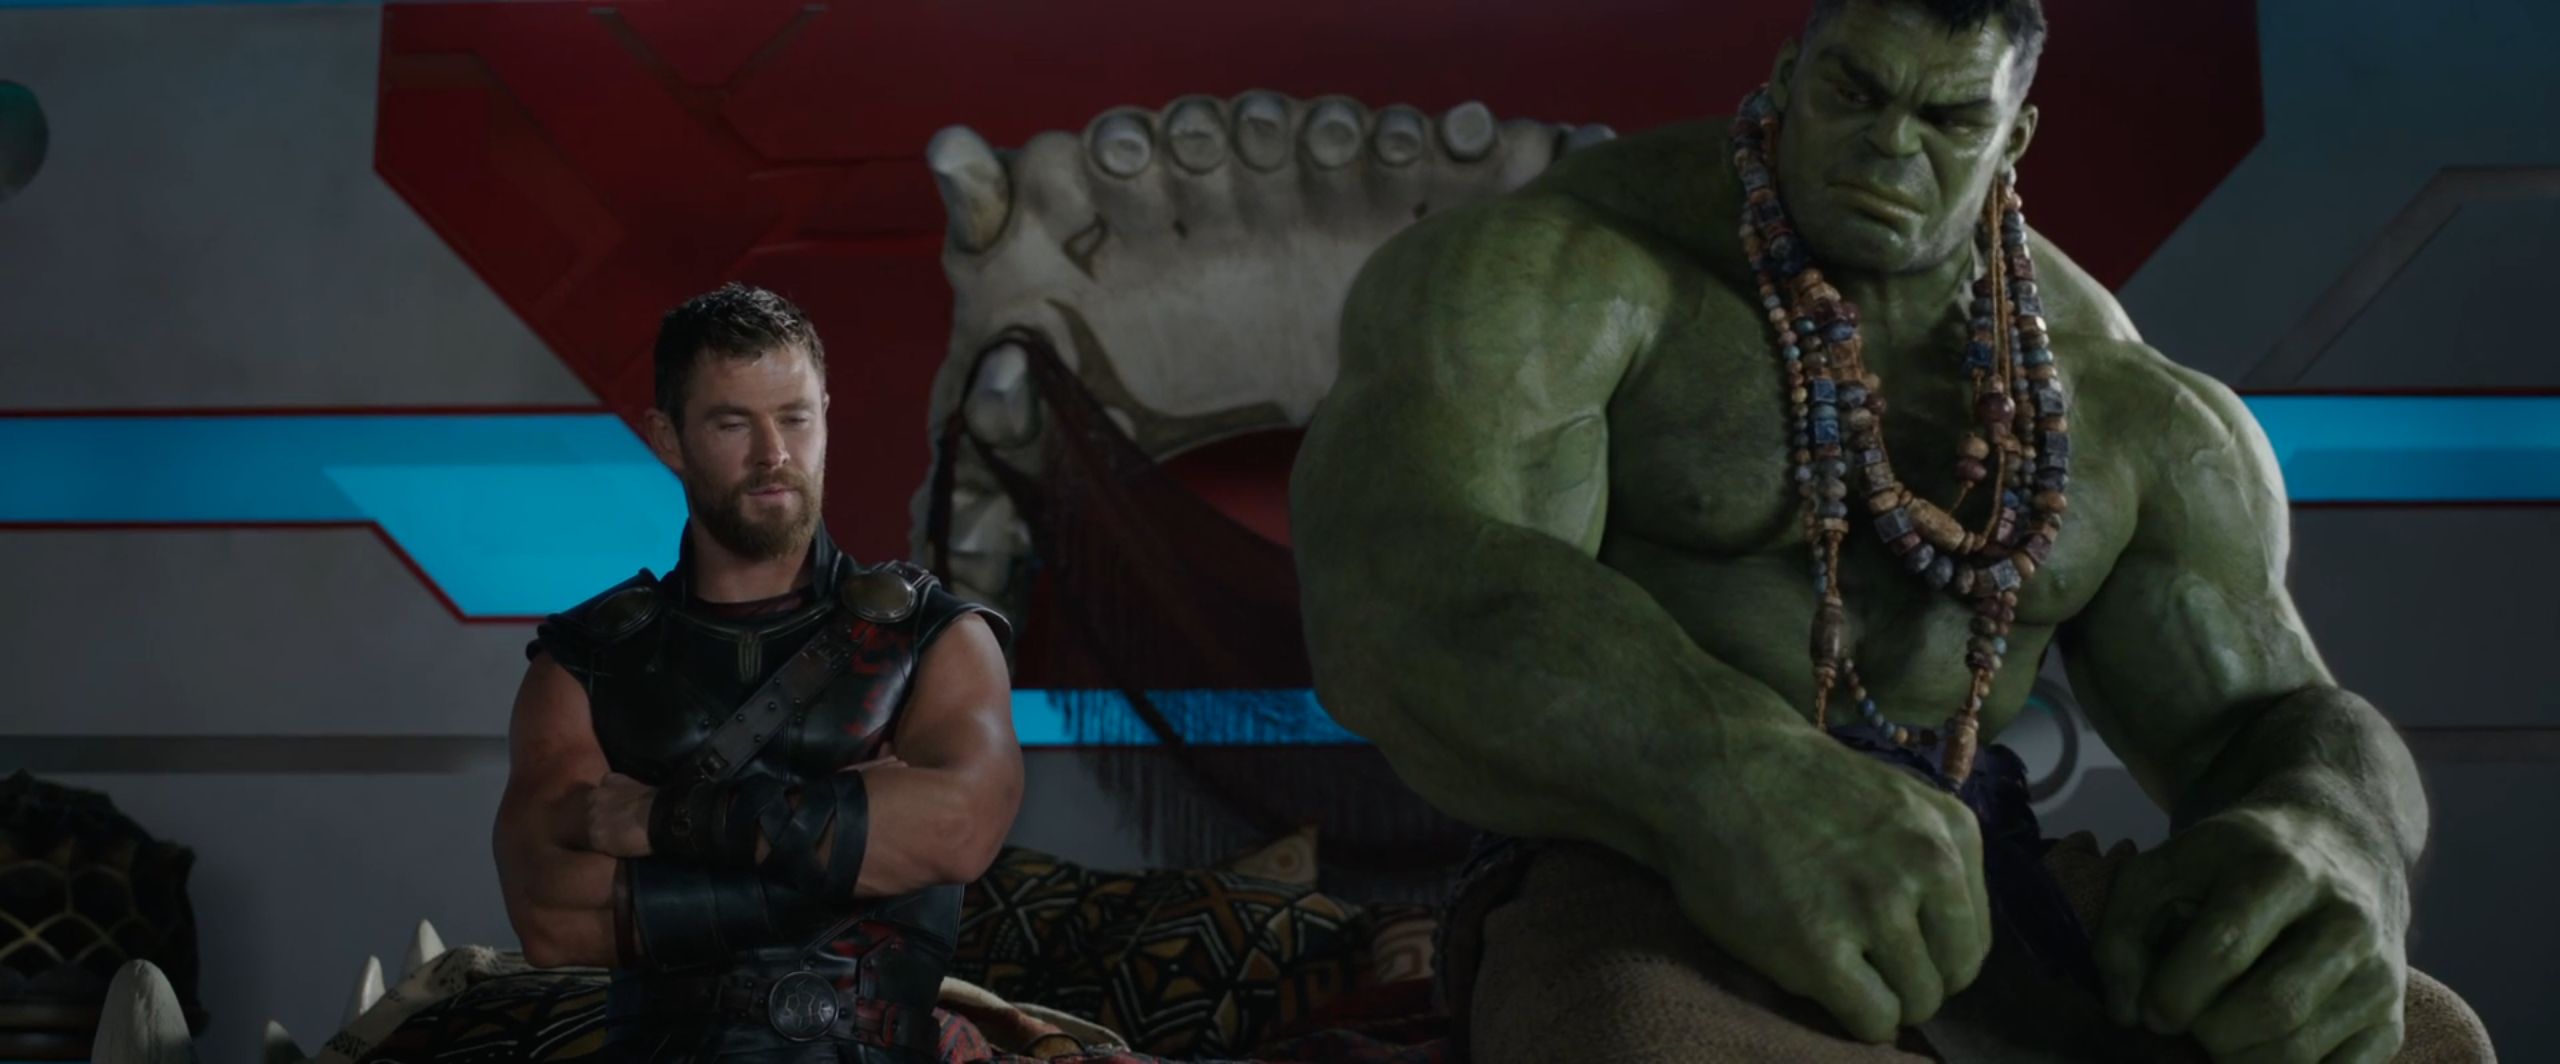 Thor Vs Hulk - DOWNLOAD FREE HD WALLPAPERS